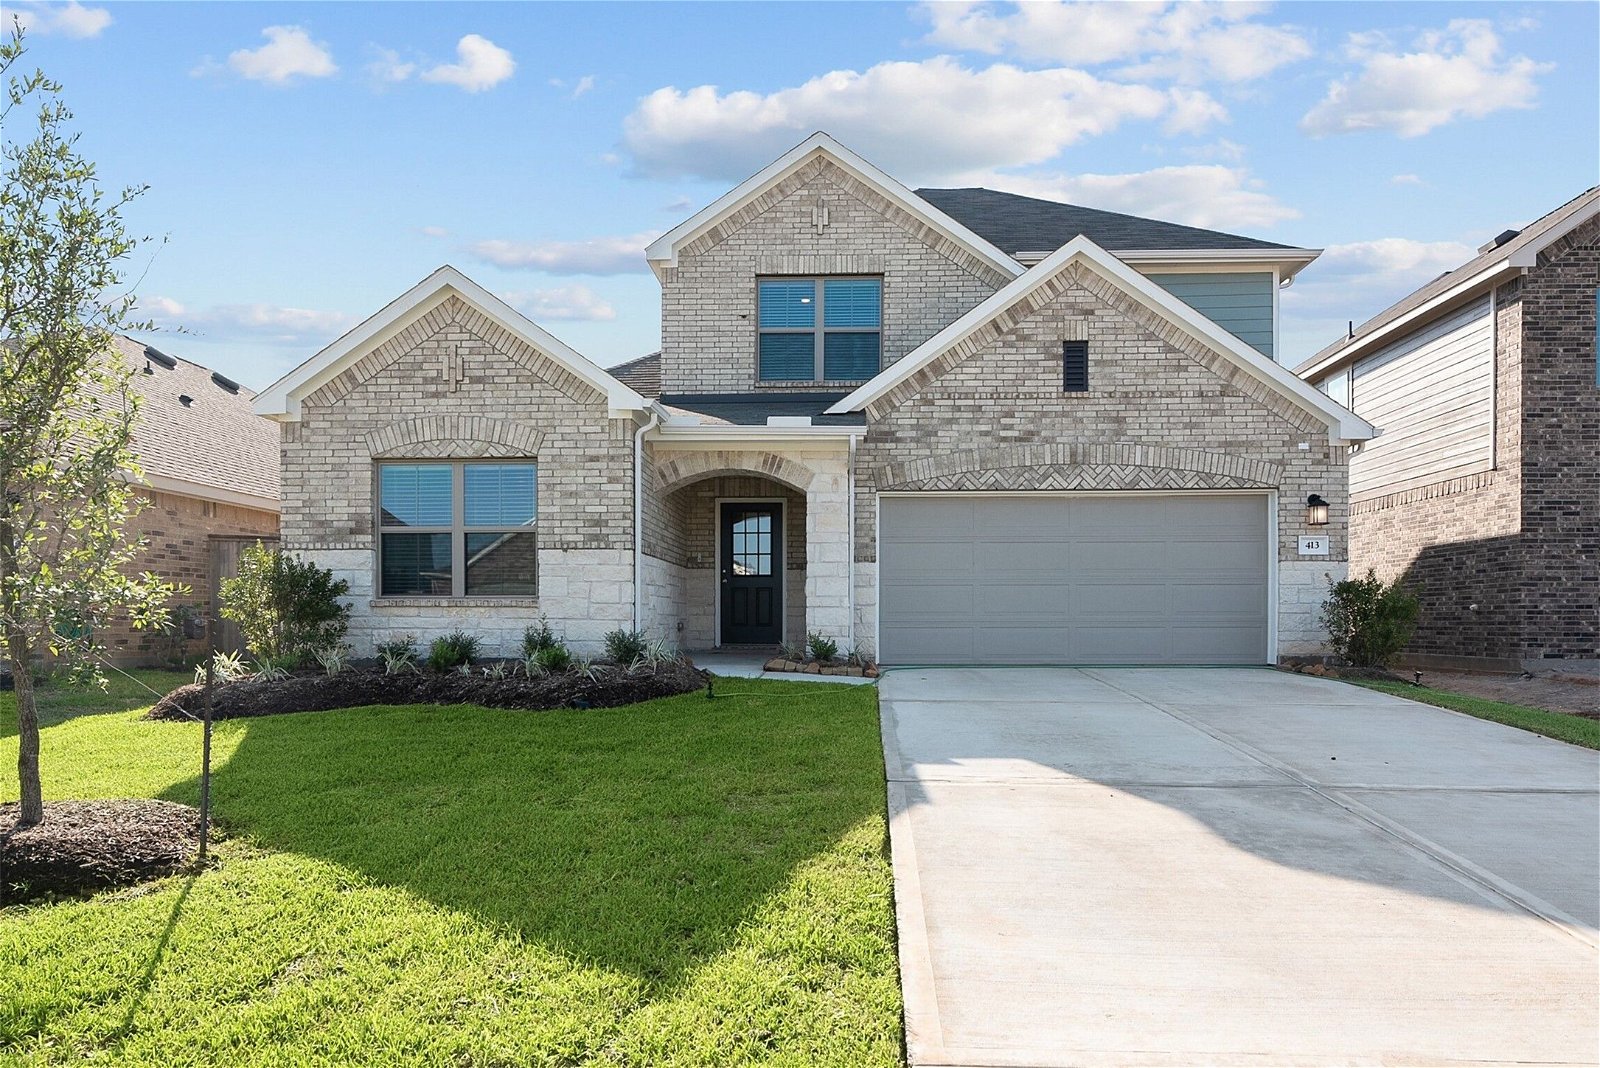 Real estate property located at 413 Ridge Palm, Montgomery, Magnolia, TX, US